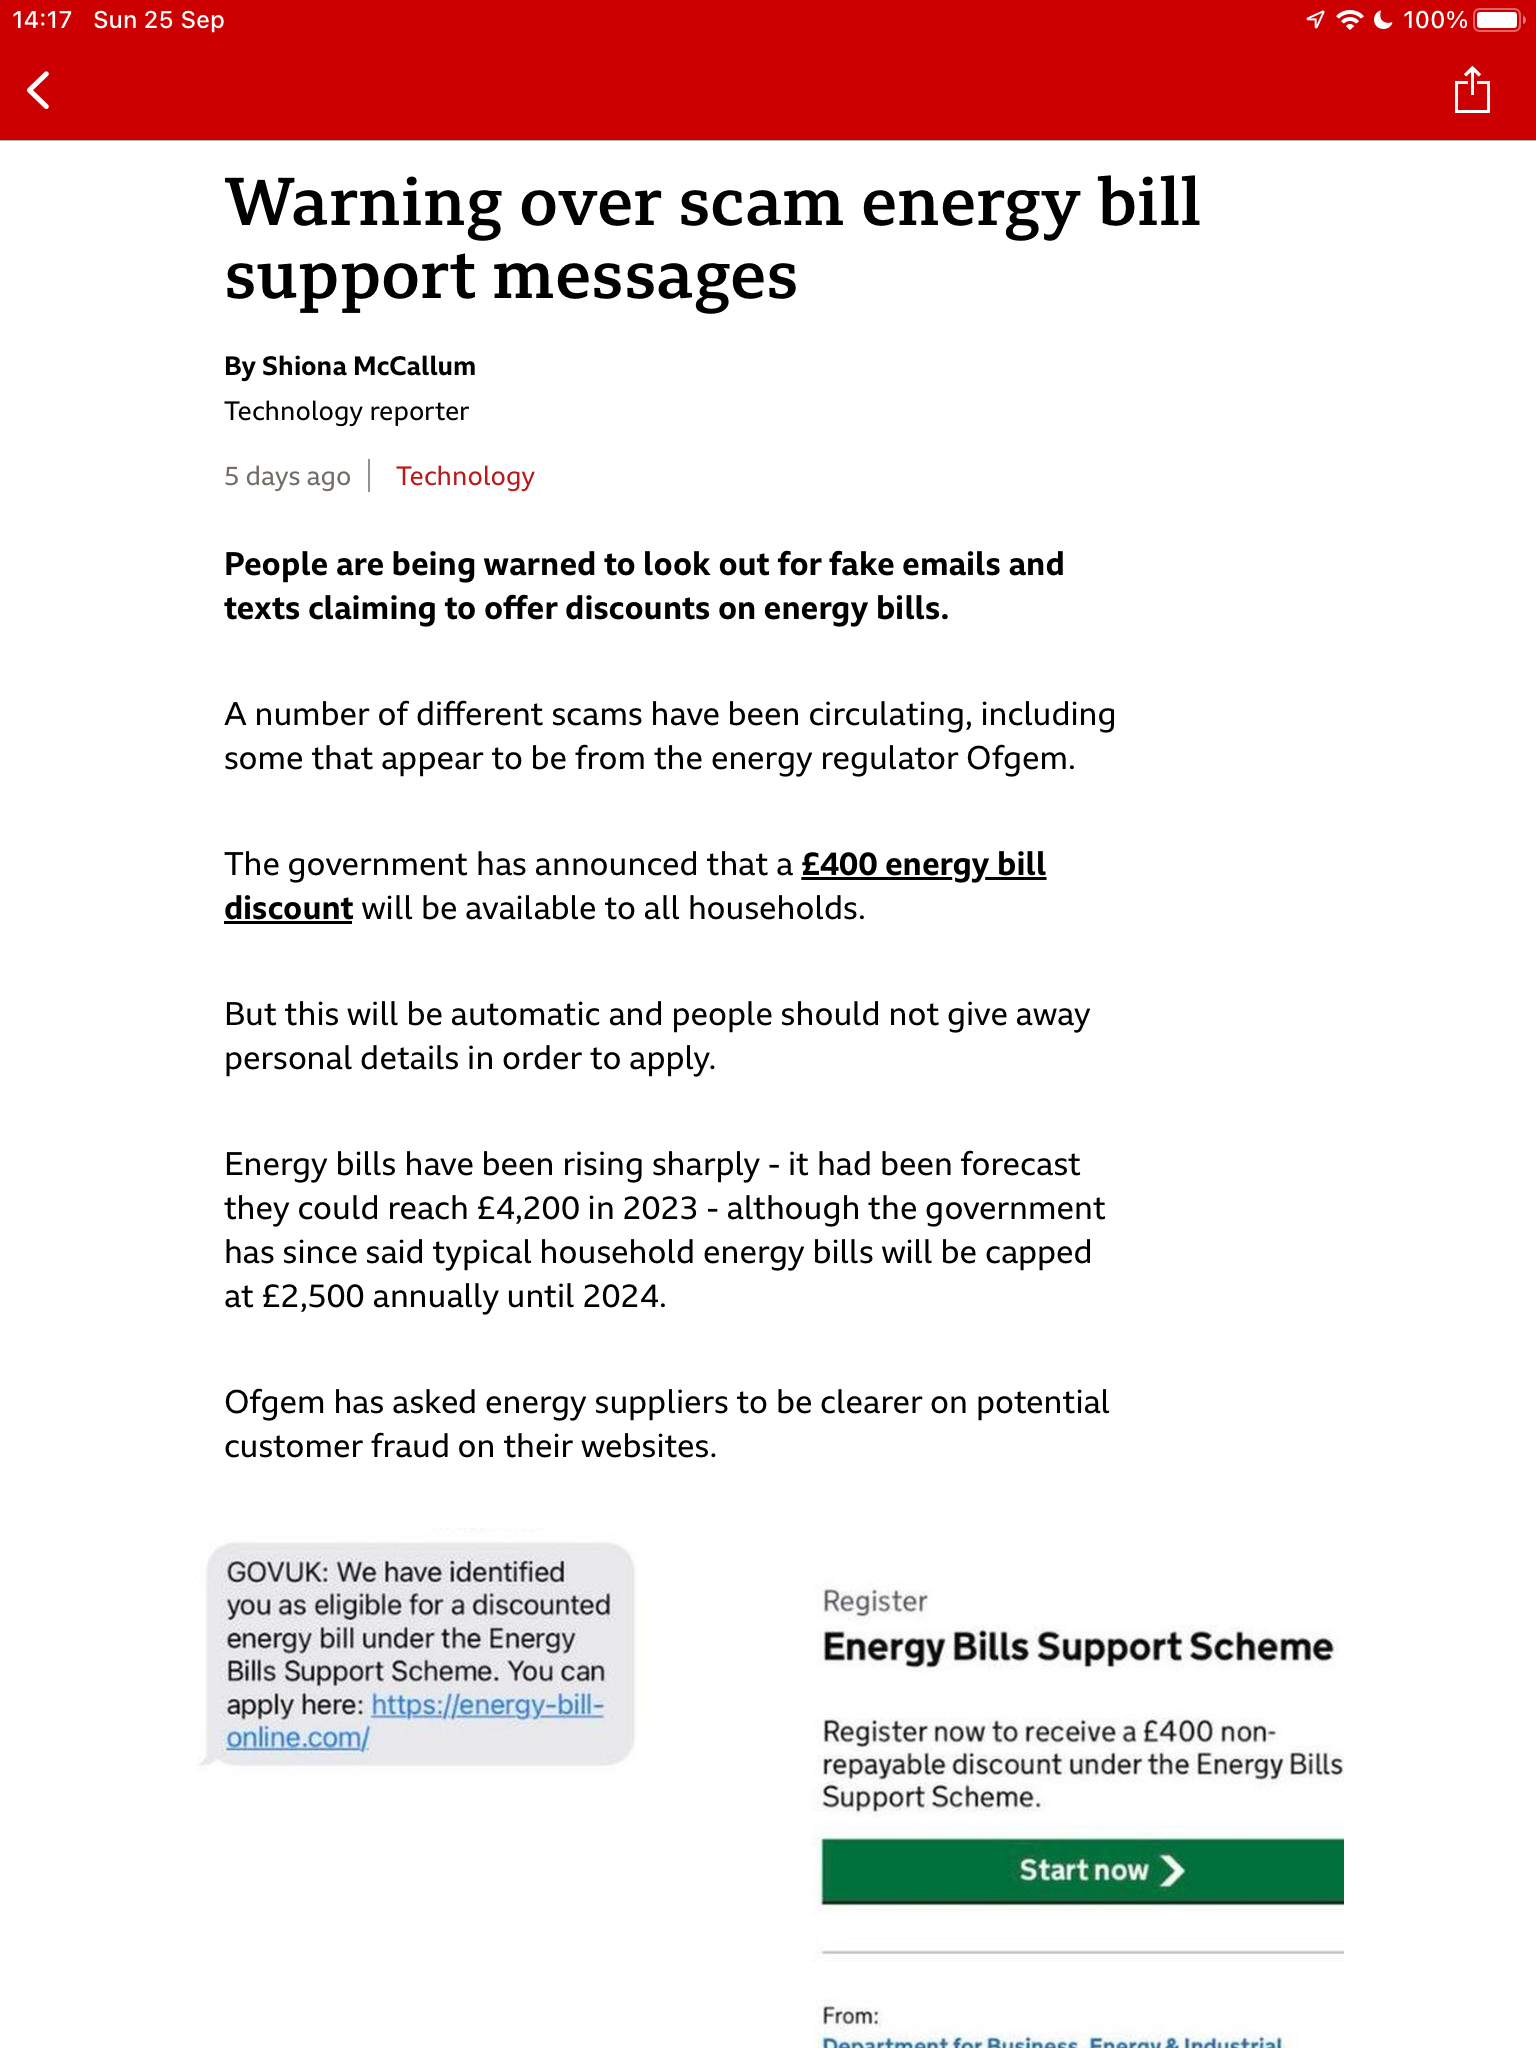 Energy Bill Discount Scam Warning